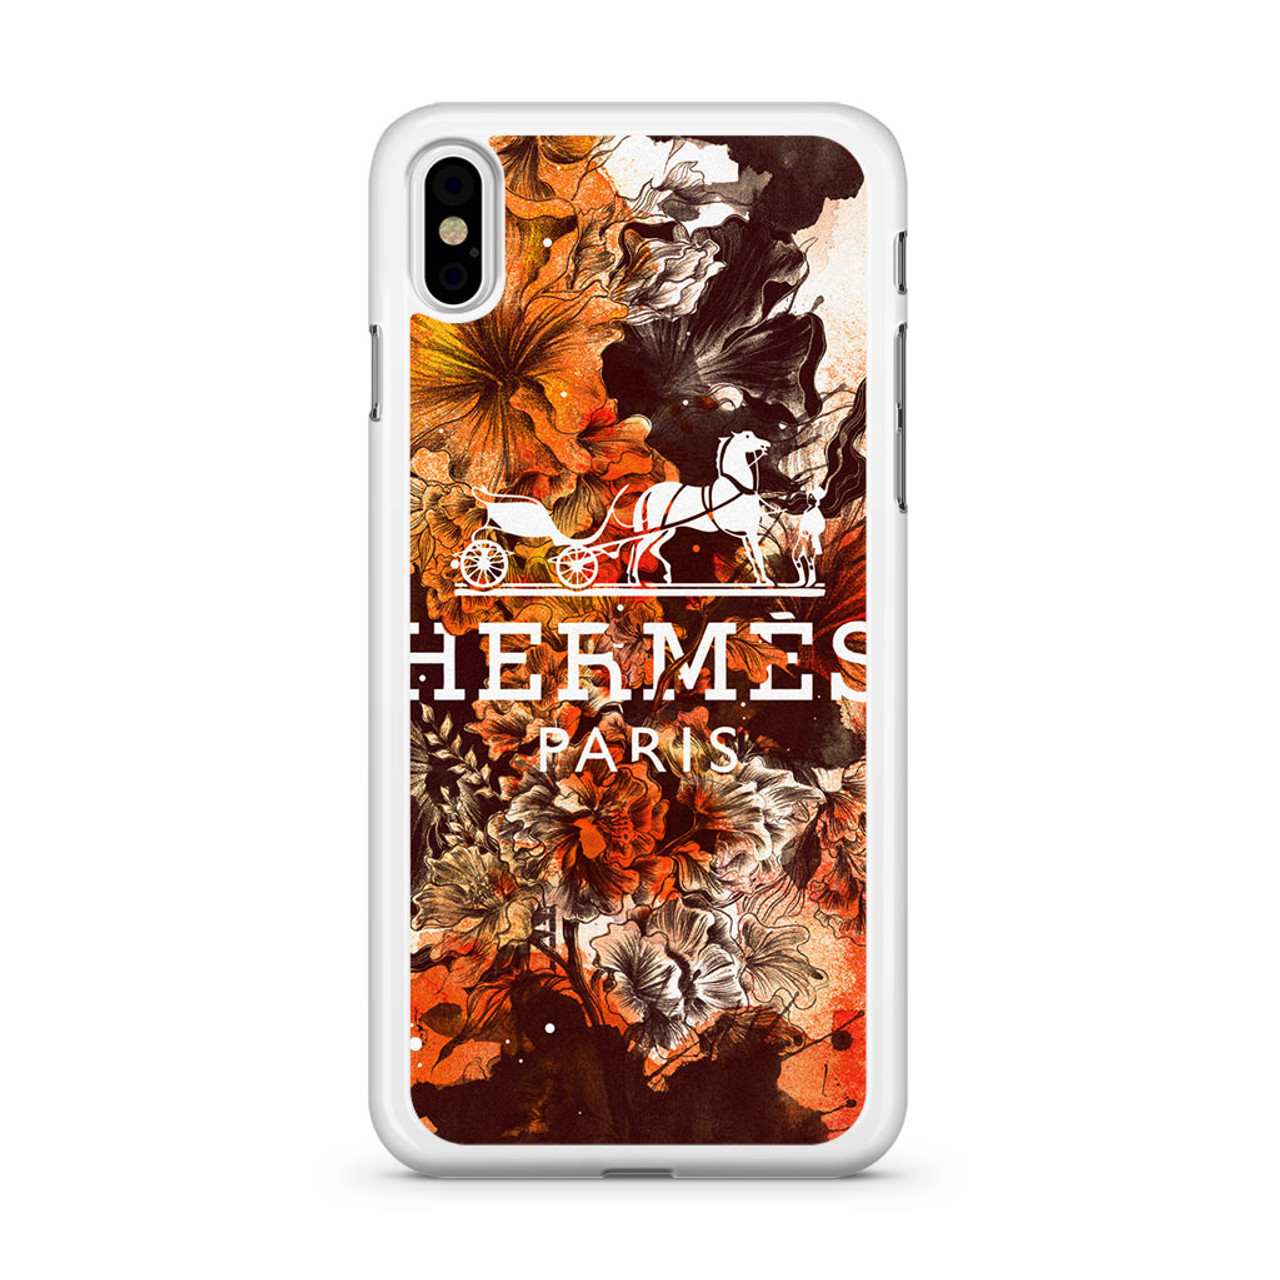 hermes iphone xs